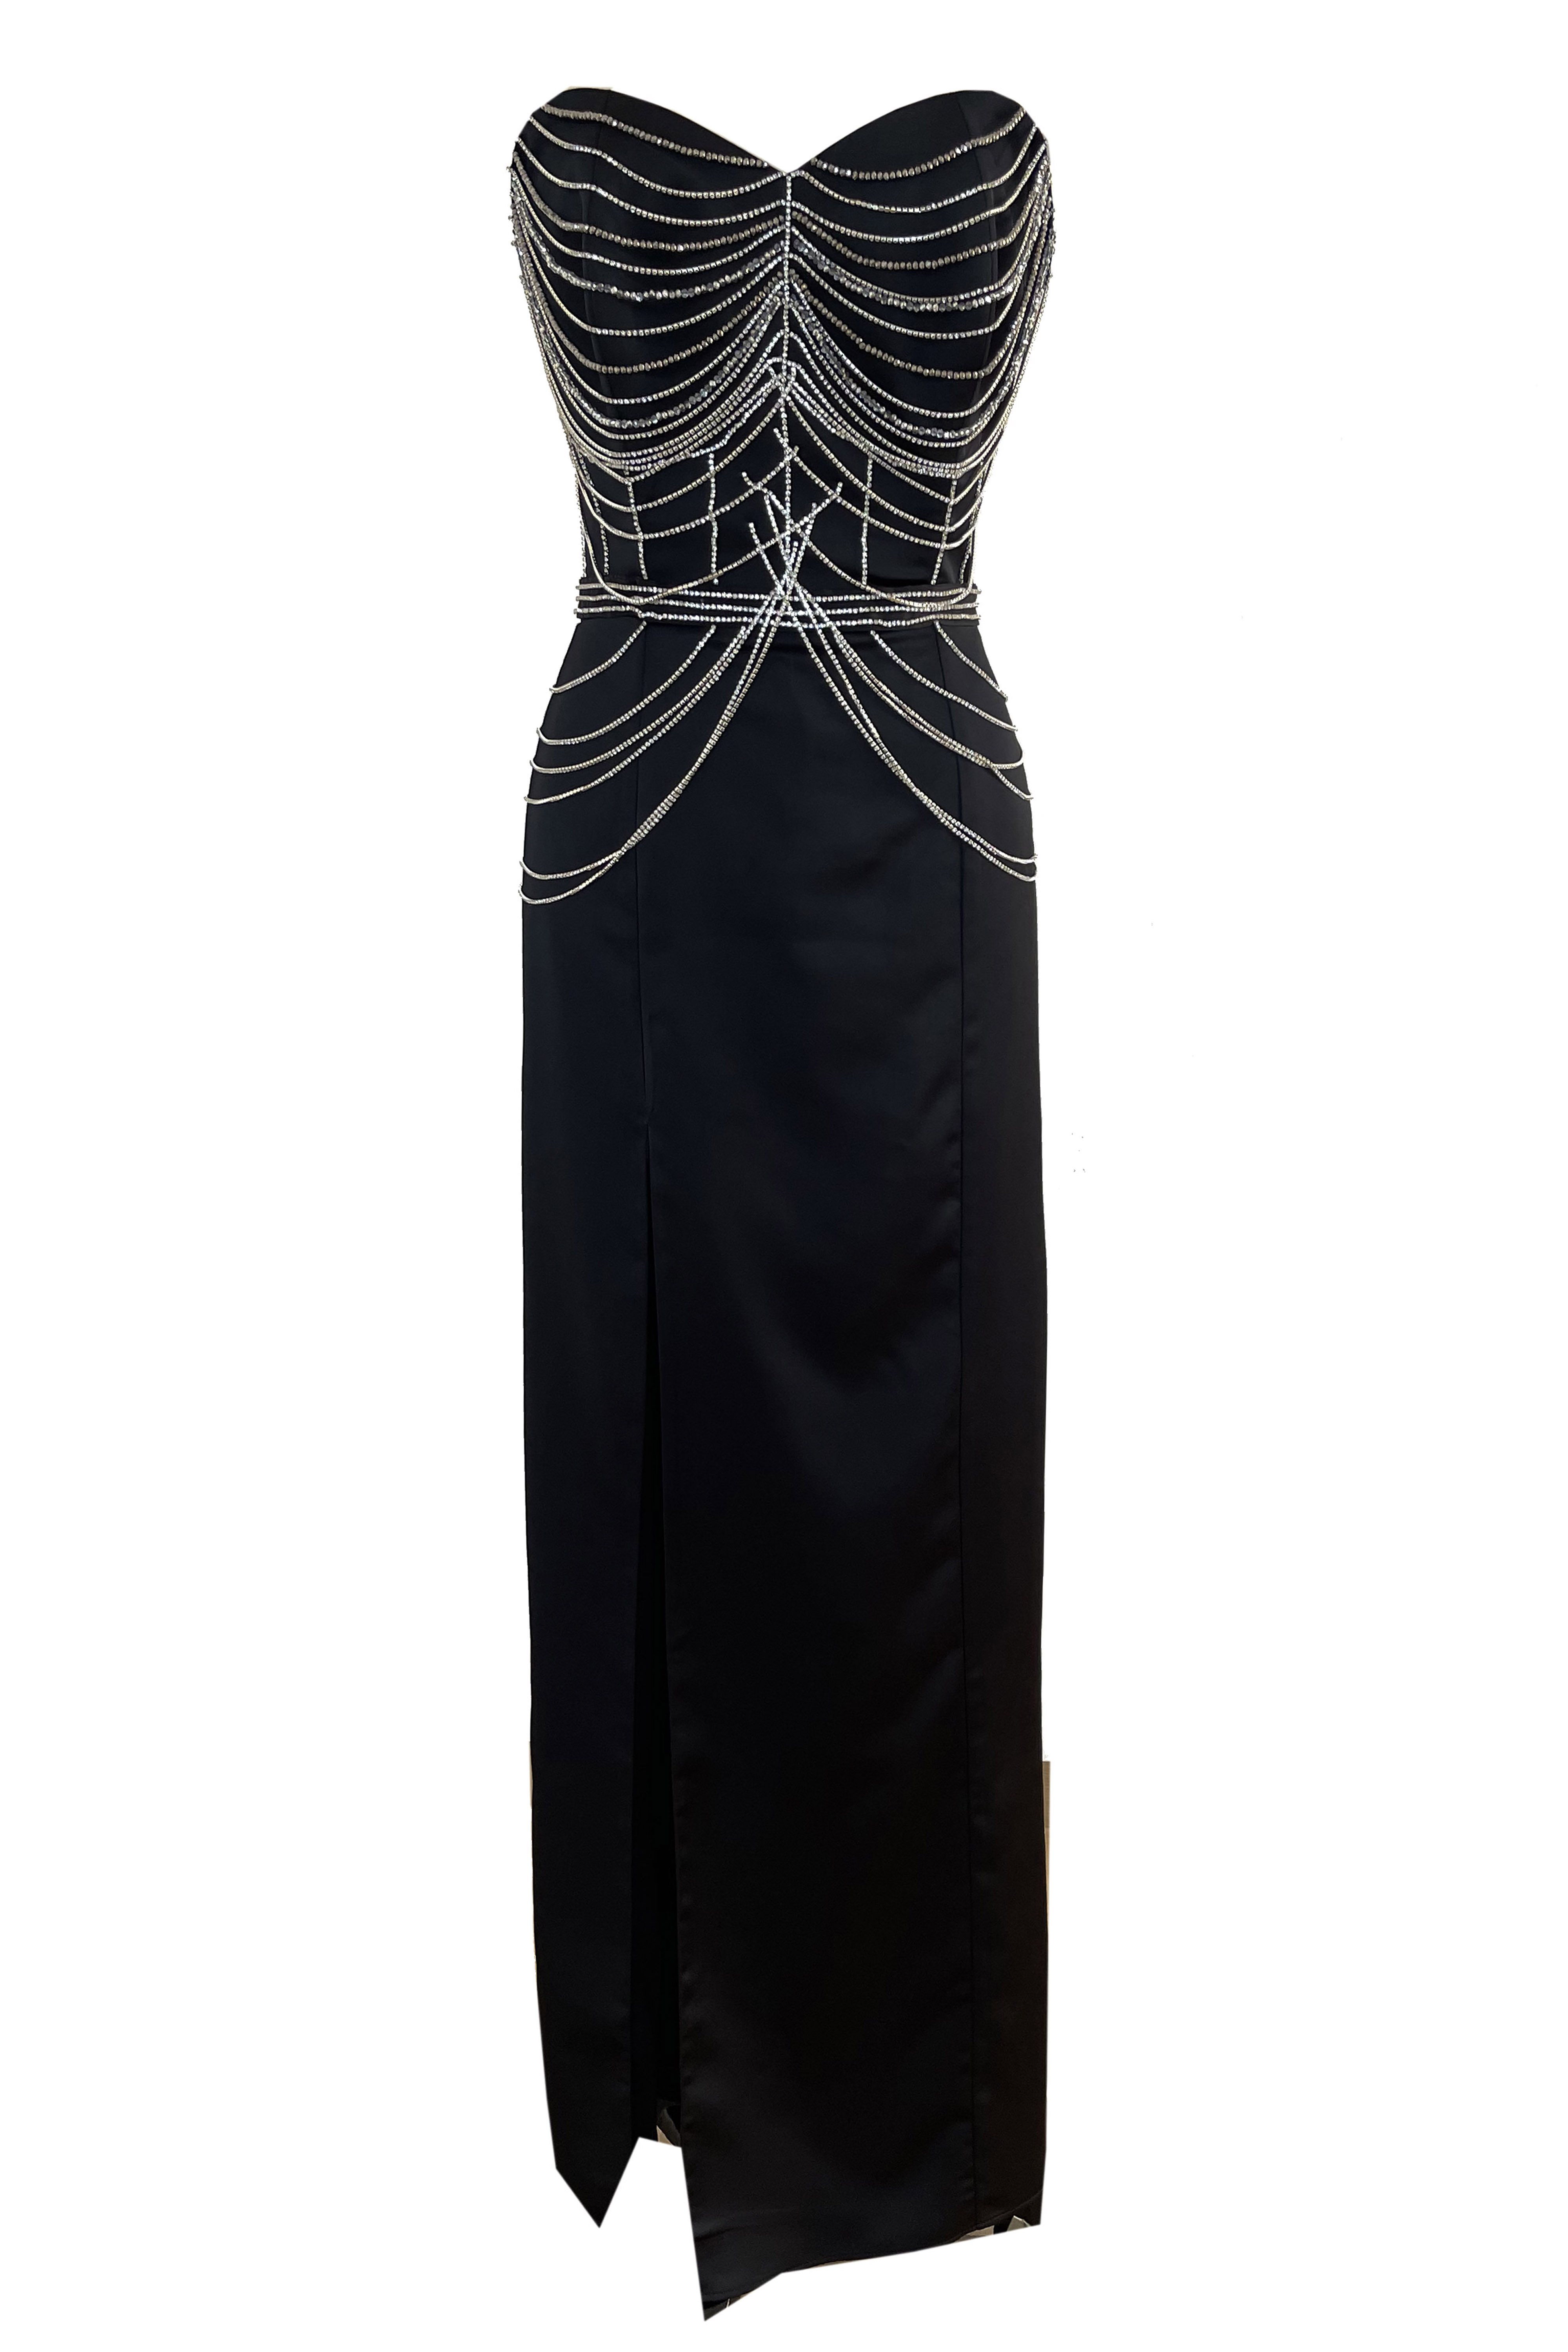 R24136 - BLACK 01 - CRISTINA black long dress with crystals AMBAR STUDIO